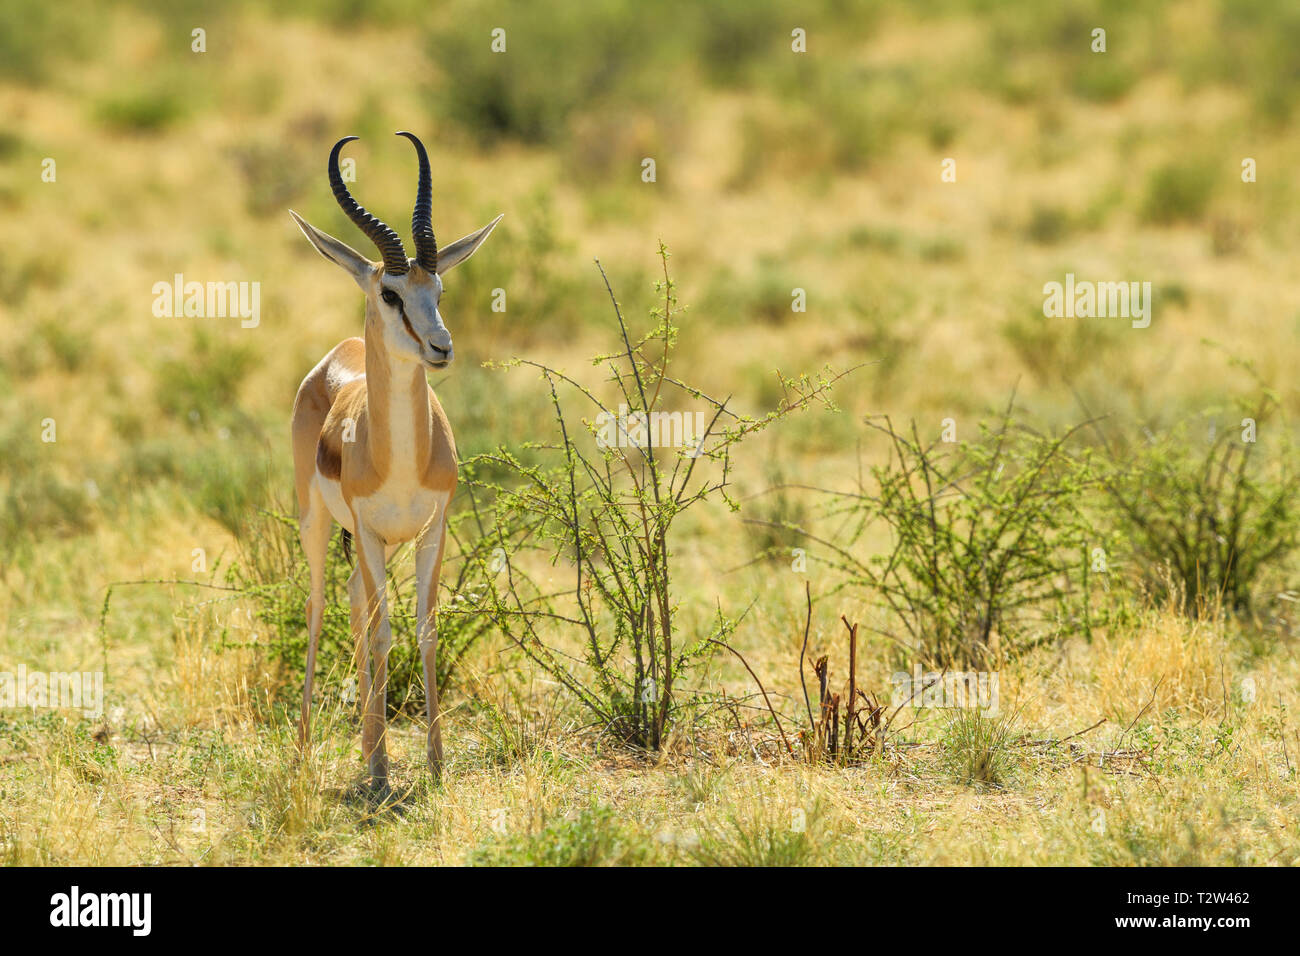 Springbok - Antidorcas marsupialis, beautiful iconic antelop from southern African bushes and plains, Etosha national park, Namibia. Stock Photo